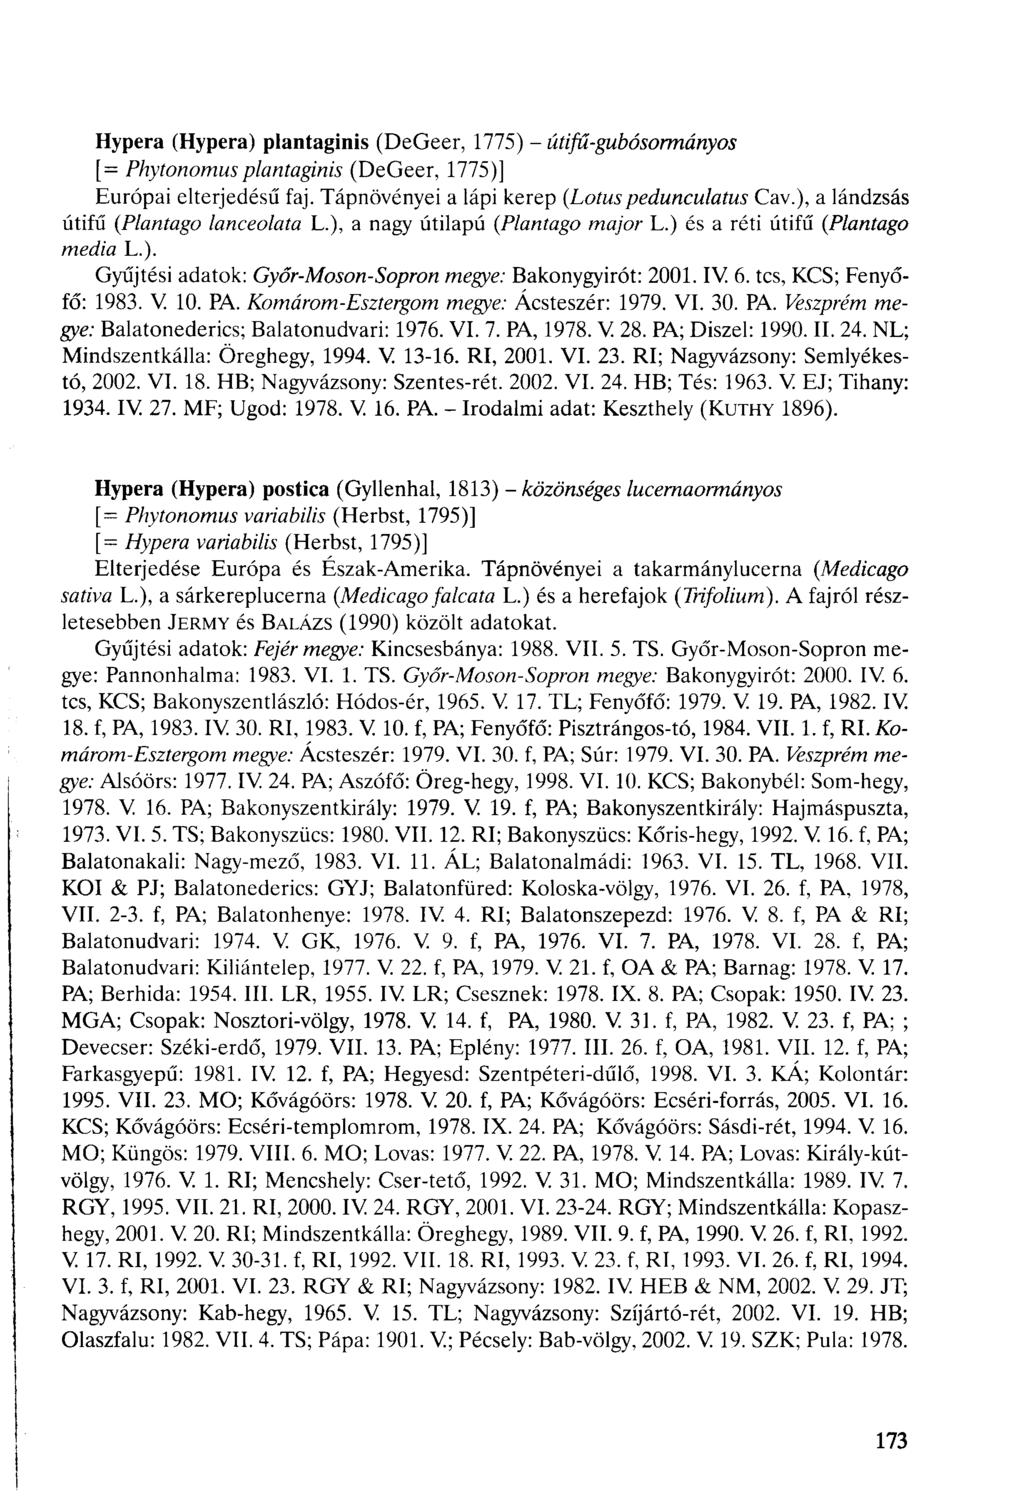 Hypera (Hypera) plantaginis (DeGeer, 1775) - [= Phytonomus plantaginis (DeGeer, 1775)] útifű-gubósormányos Európai elterjedésű faj. Tápnövényei a lápi kerep (Lotuspedunculatus Cav.